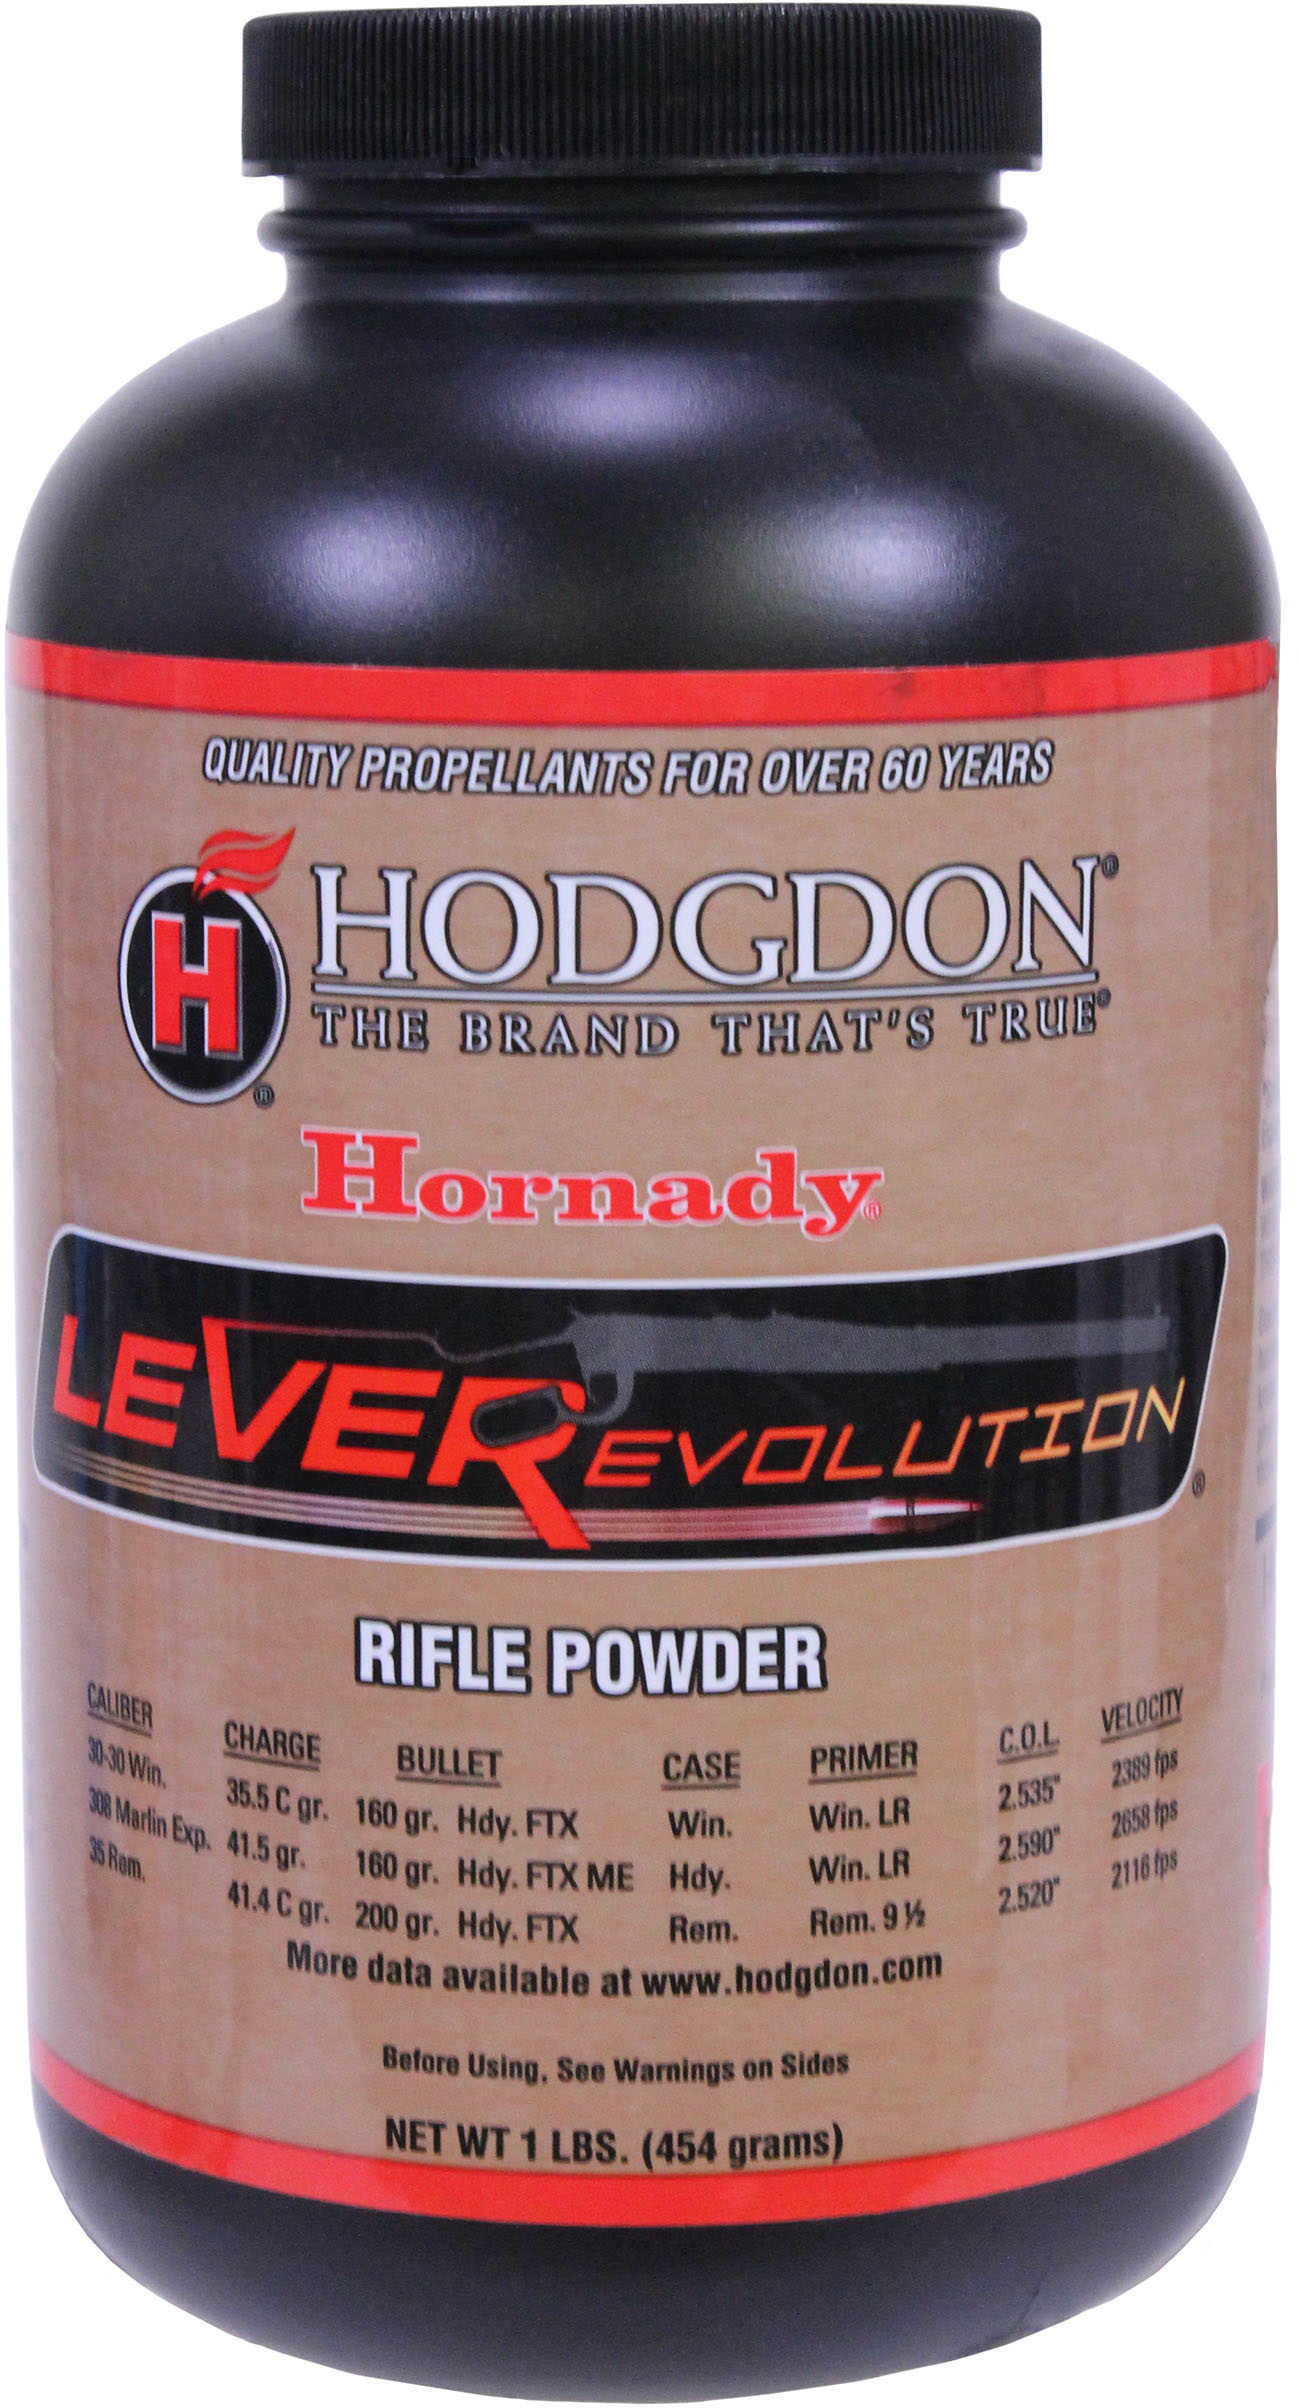 Leverevolution Size: 1 Lbs. Manufacturer: Hodgdon Powder Co., Inc. Model: HDHHLR1